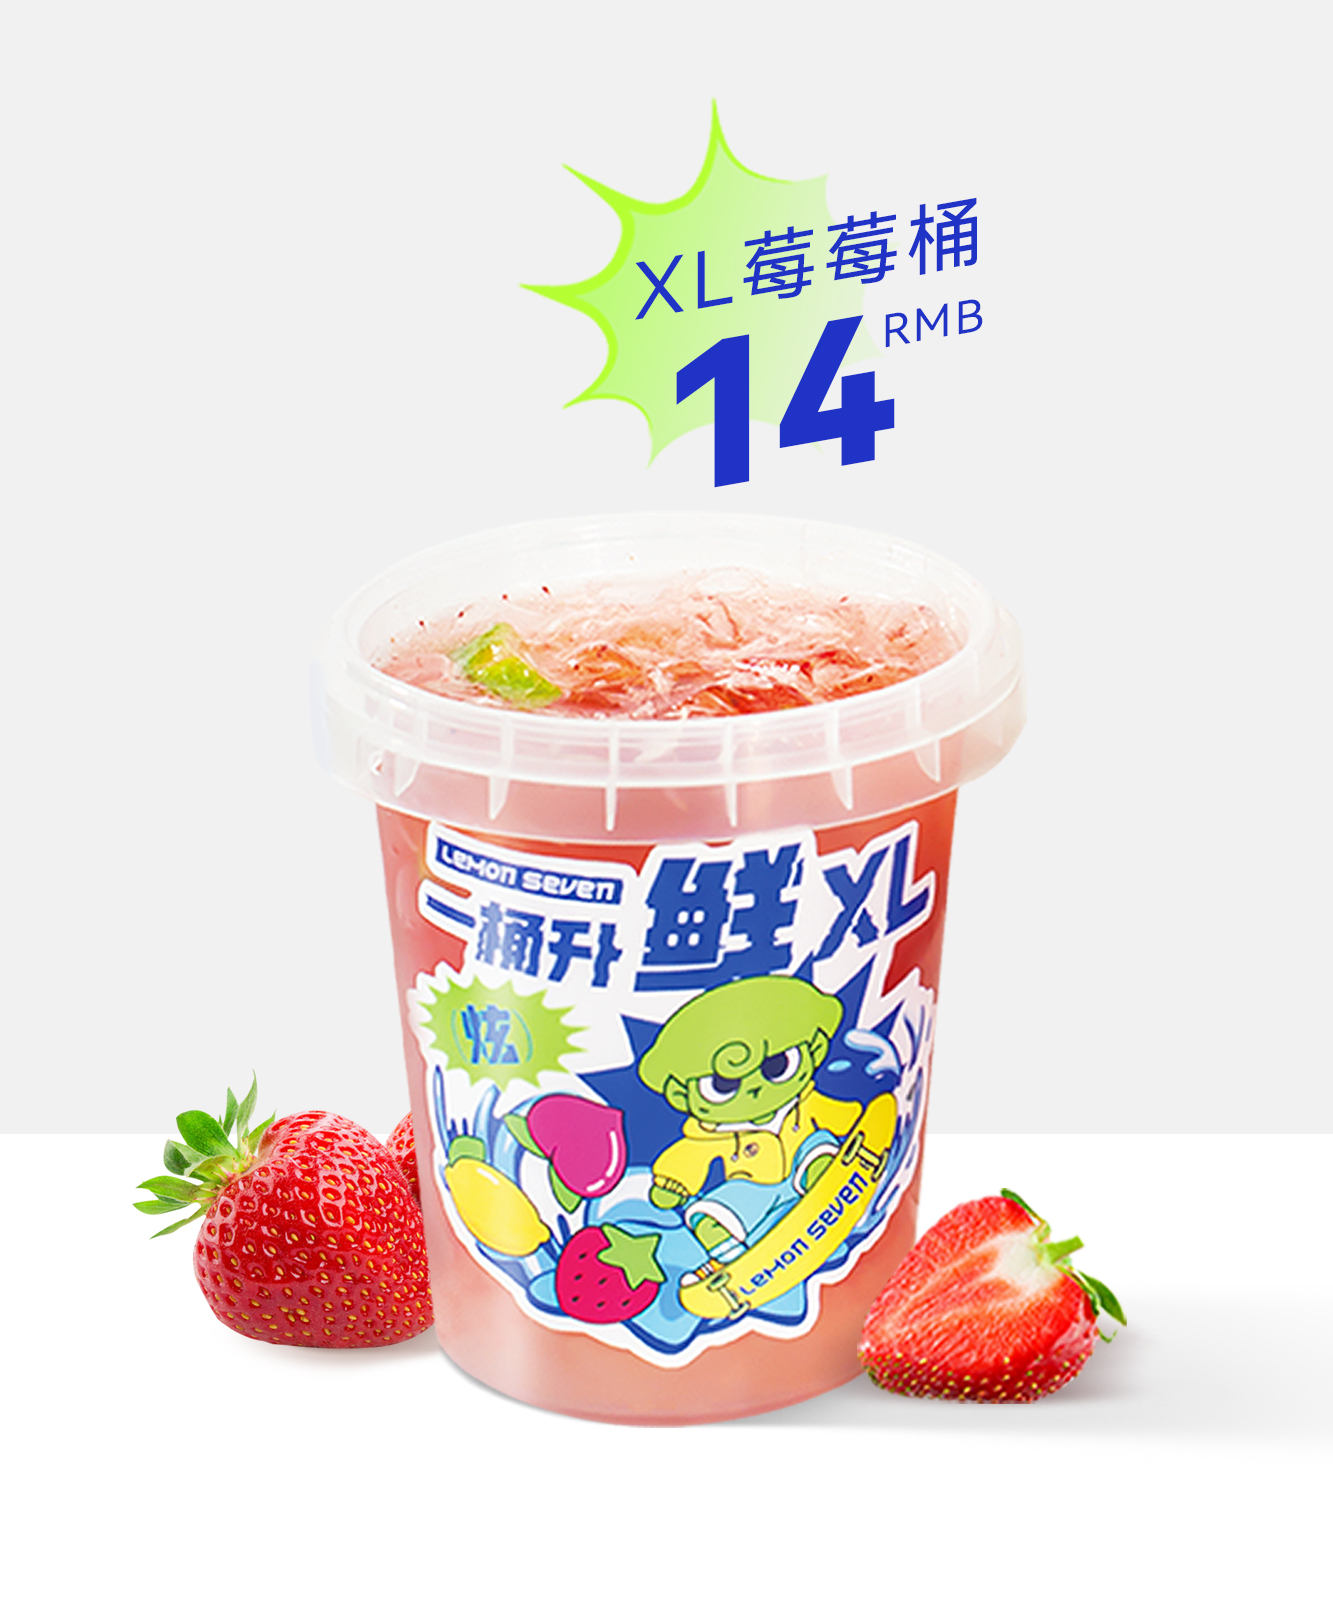 XL莓莓桶